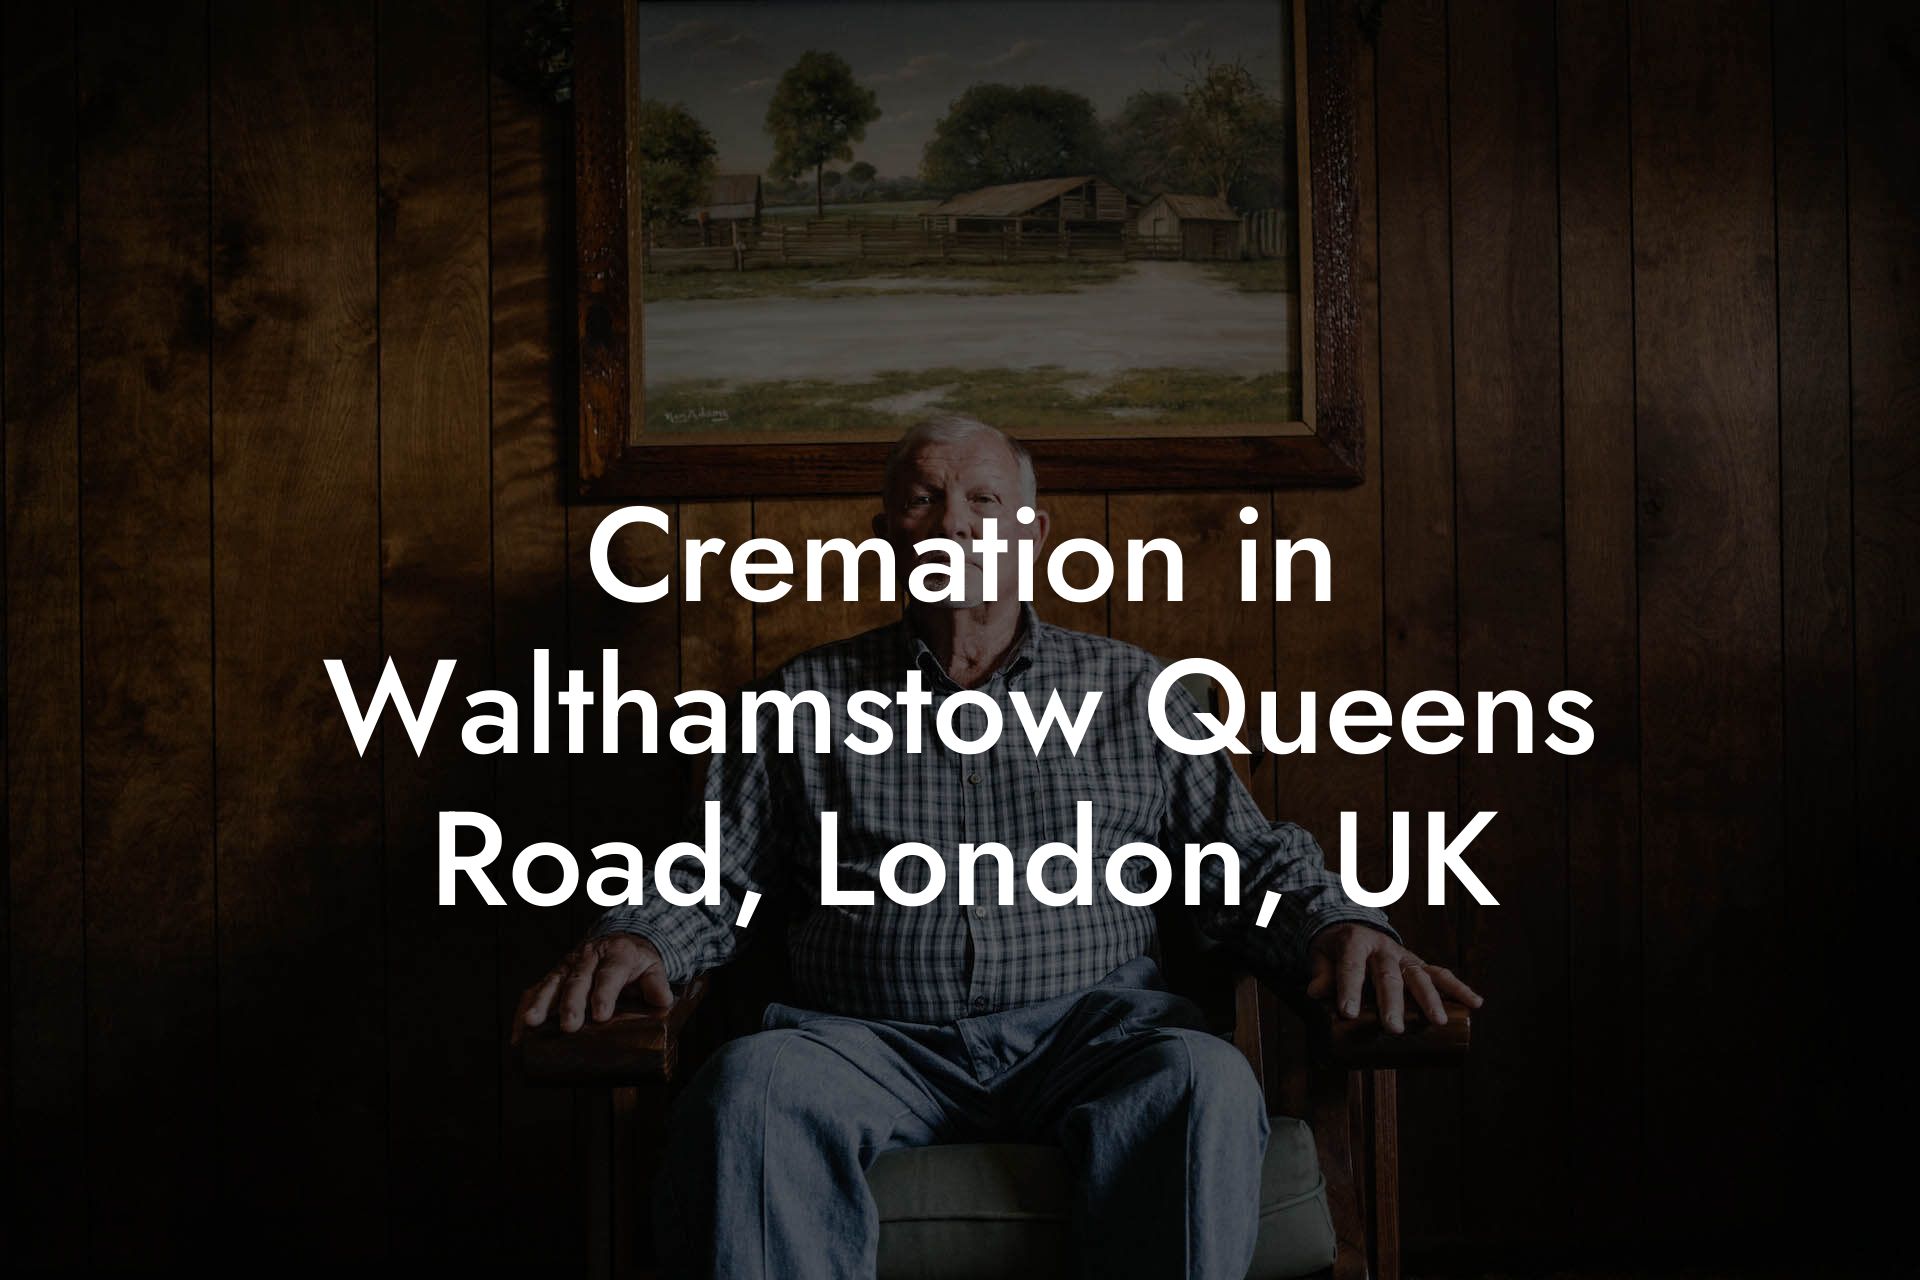 Cremation in Walthamstow Queens Road, London, UK